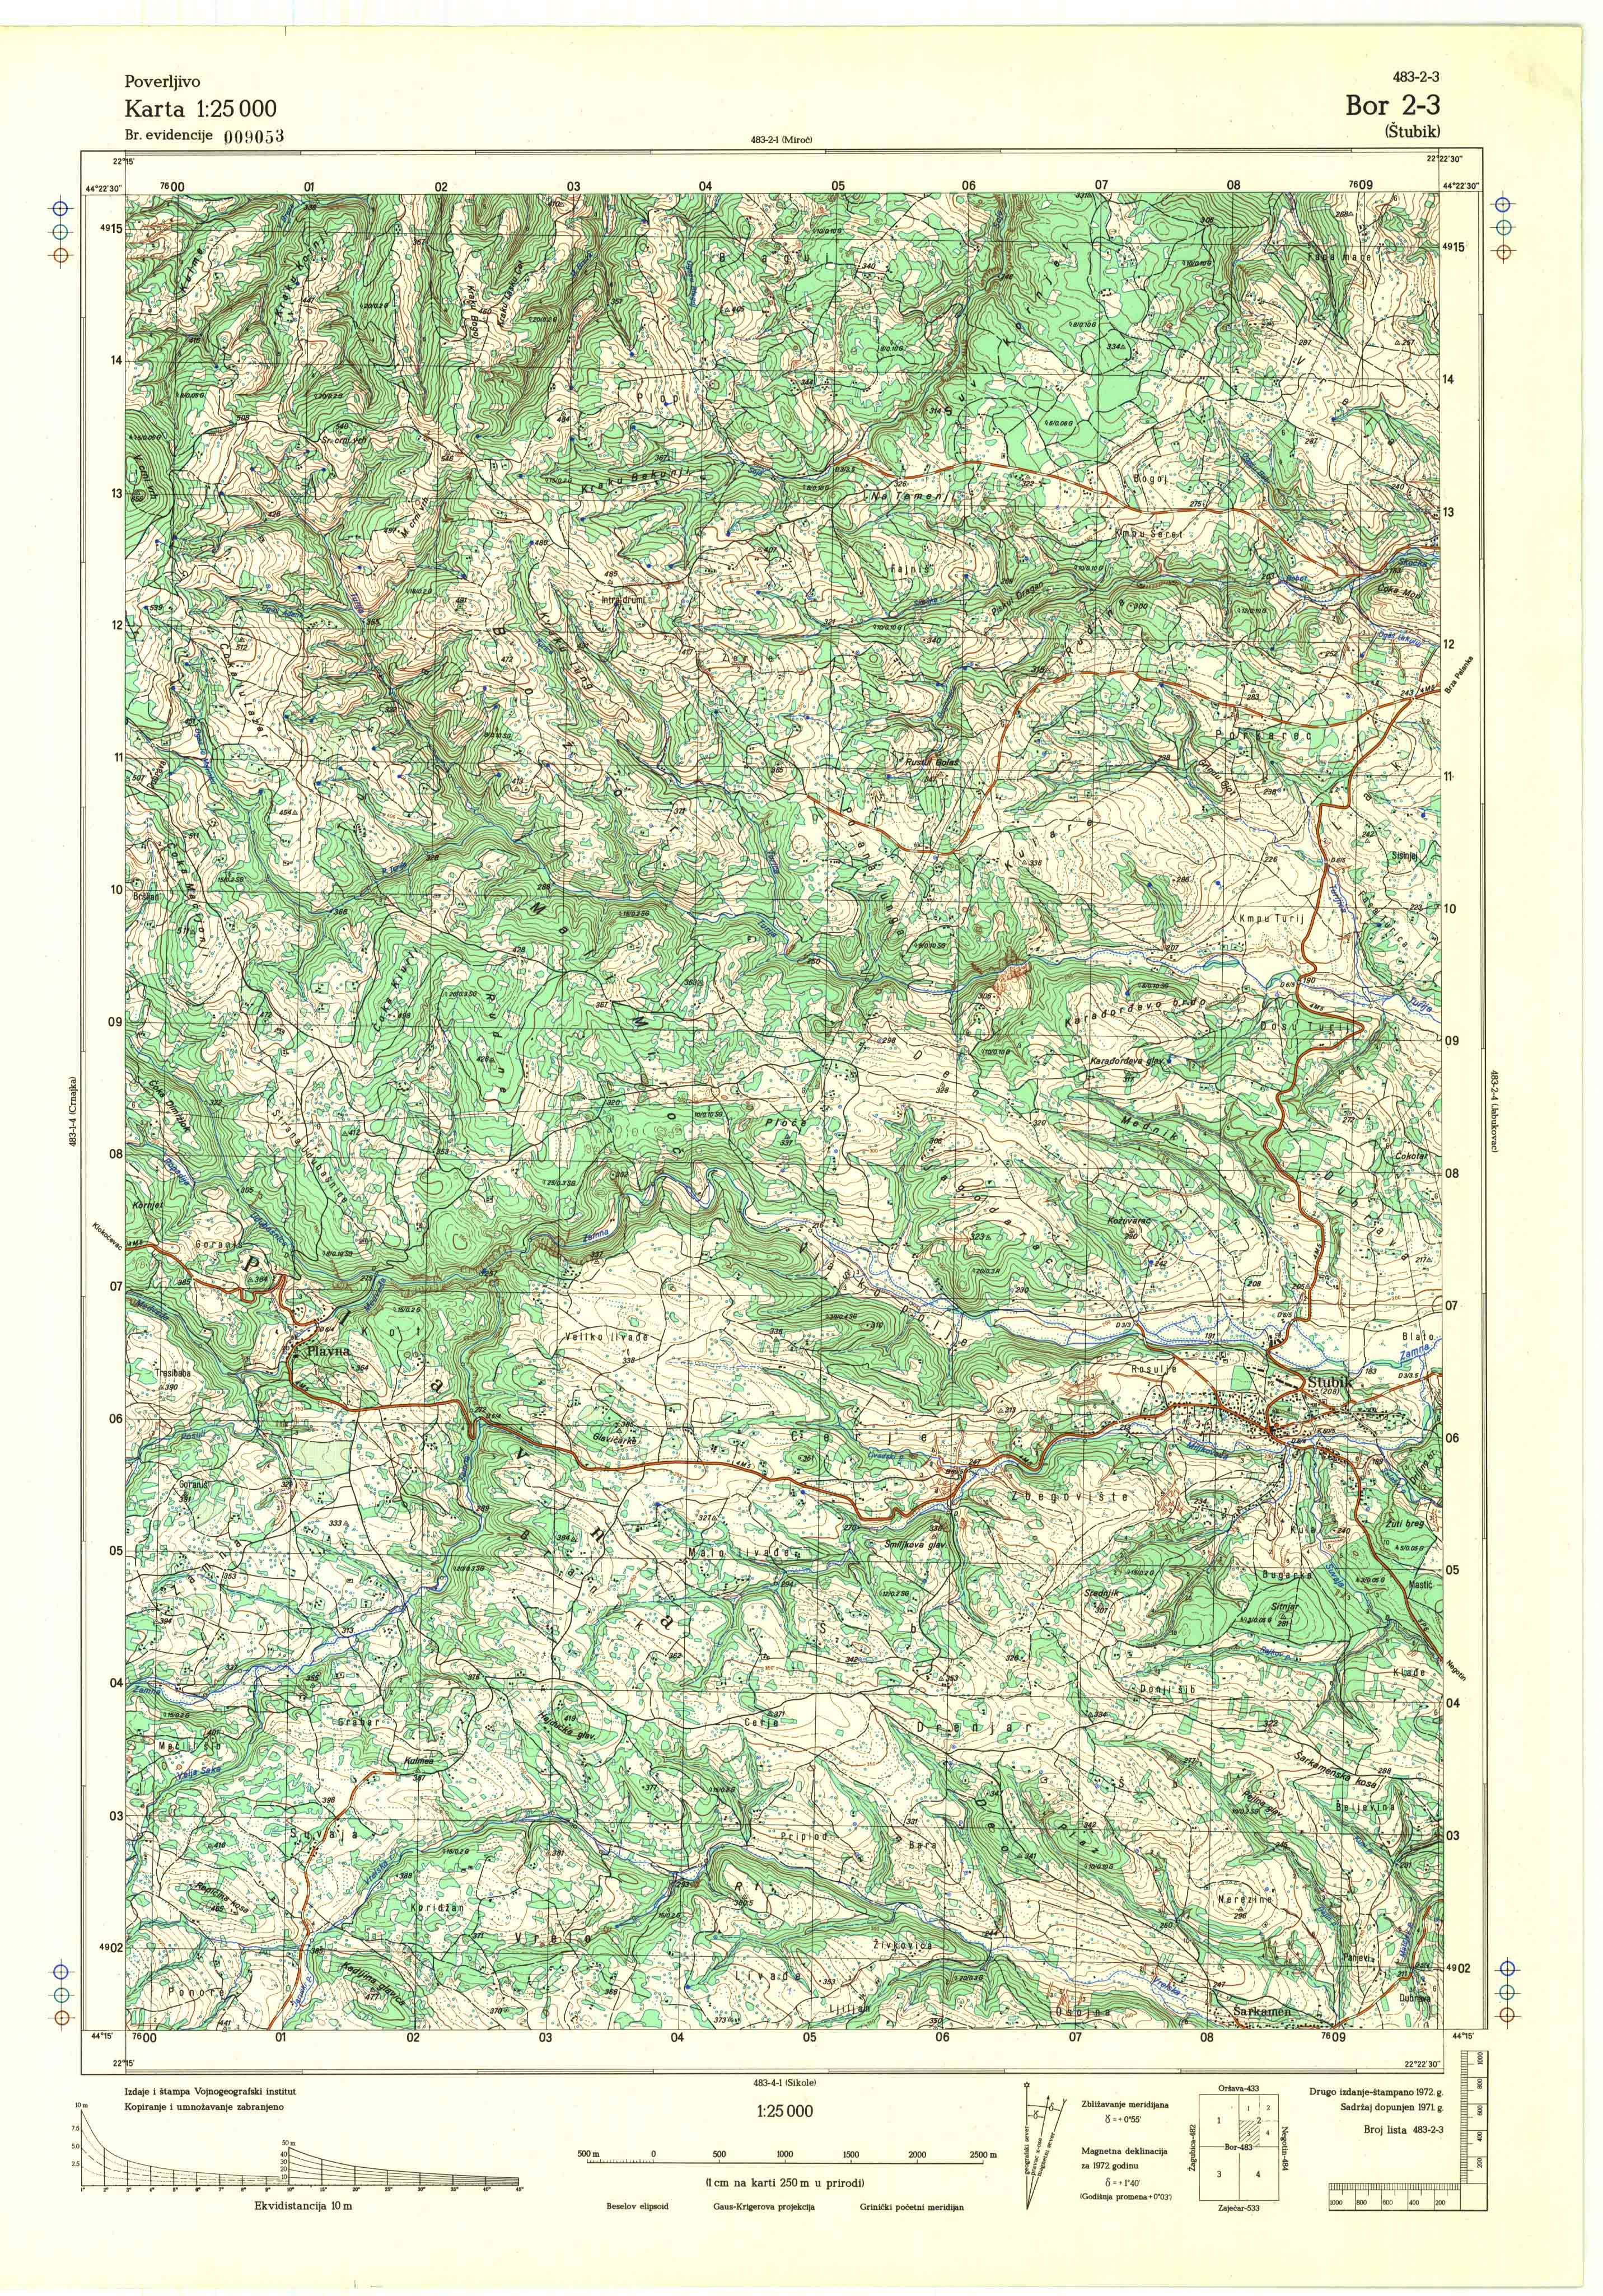  topografska karta srbije 25000 JNA  Bor